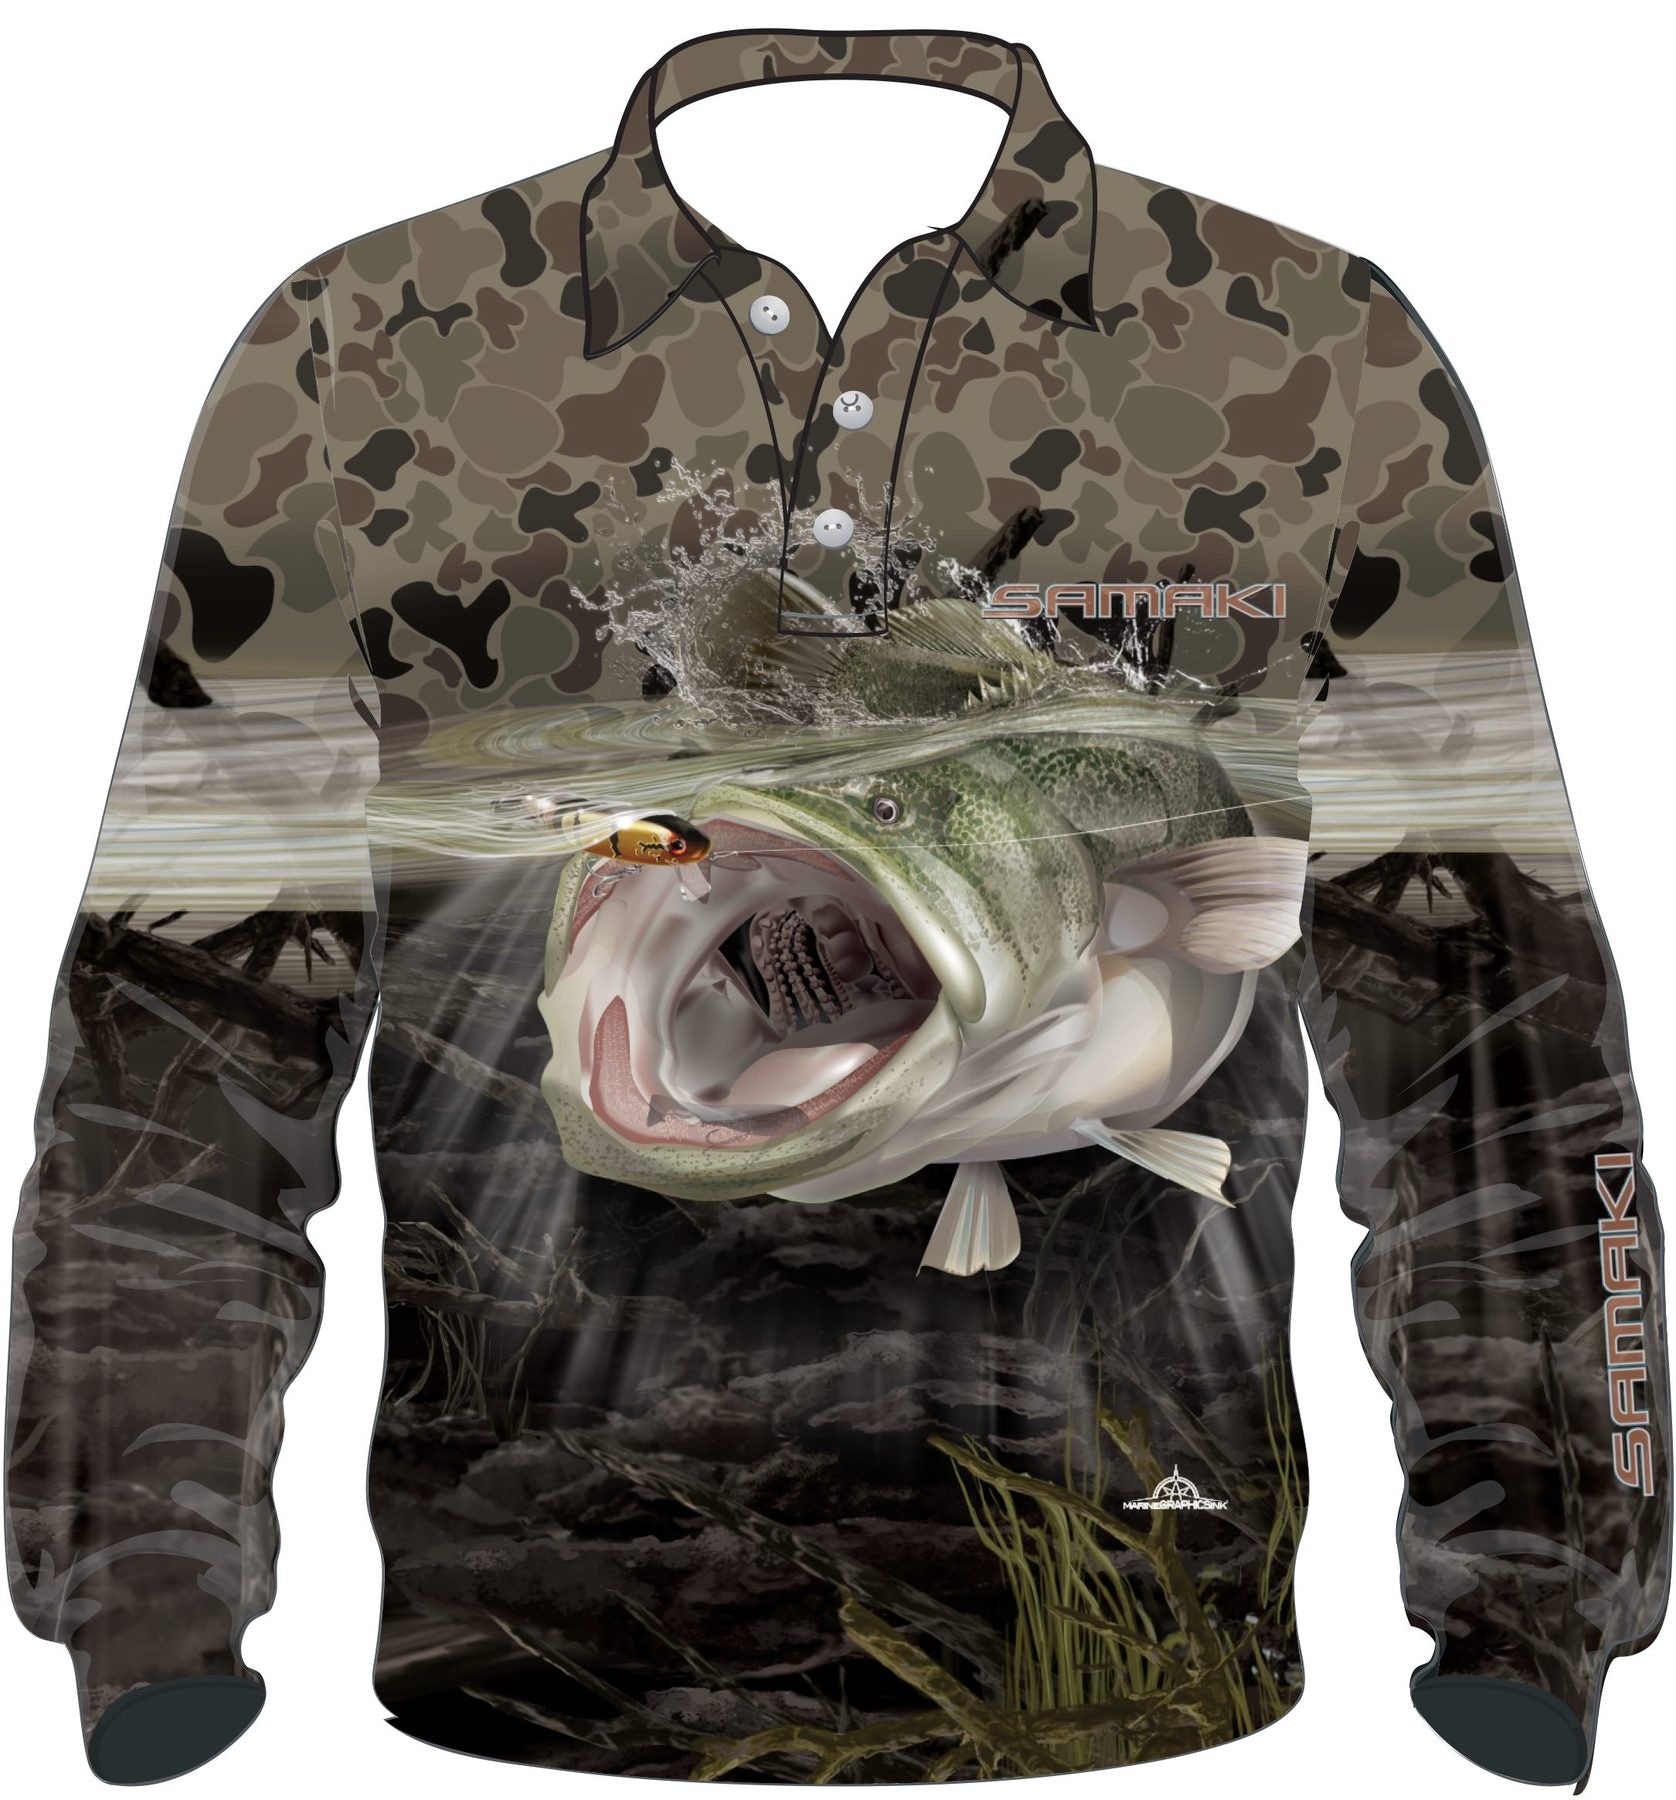 Samaki Kids Camo Cod L/S Fishing Shirt - 14 - Mansfield Hunting & Fishing - Products to prepare for Corona Virus